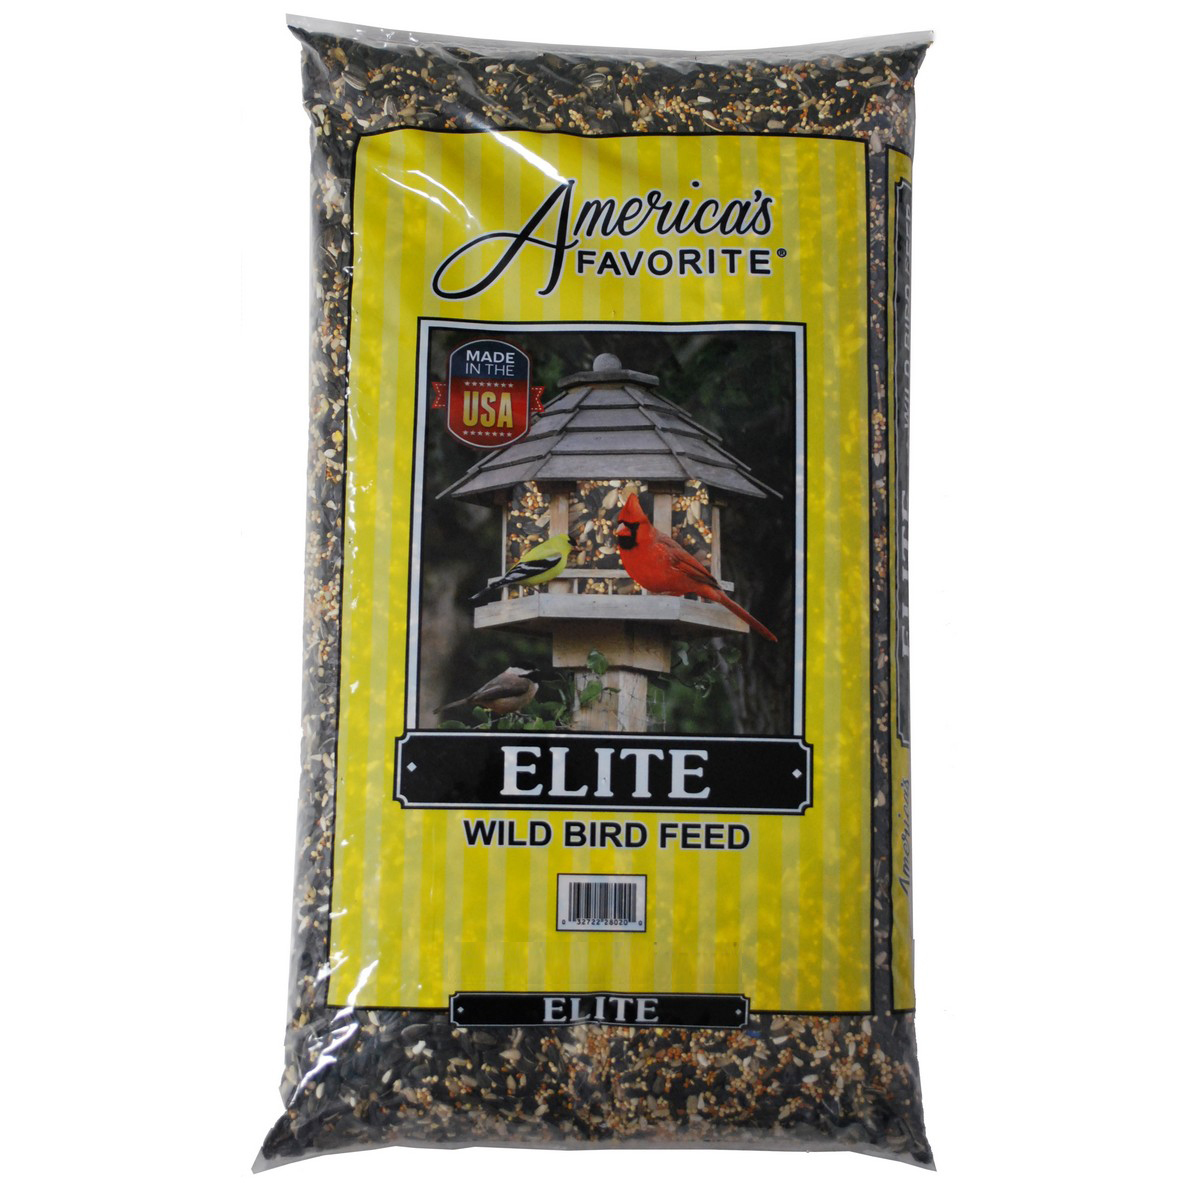 Picture of Americas Favorite 280020 10 lbs Elite Wild Bird Feed Yellow Stripe Bag, Yellow Stripe